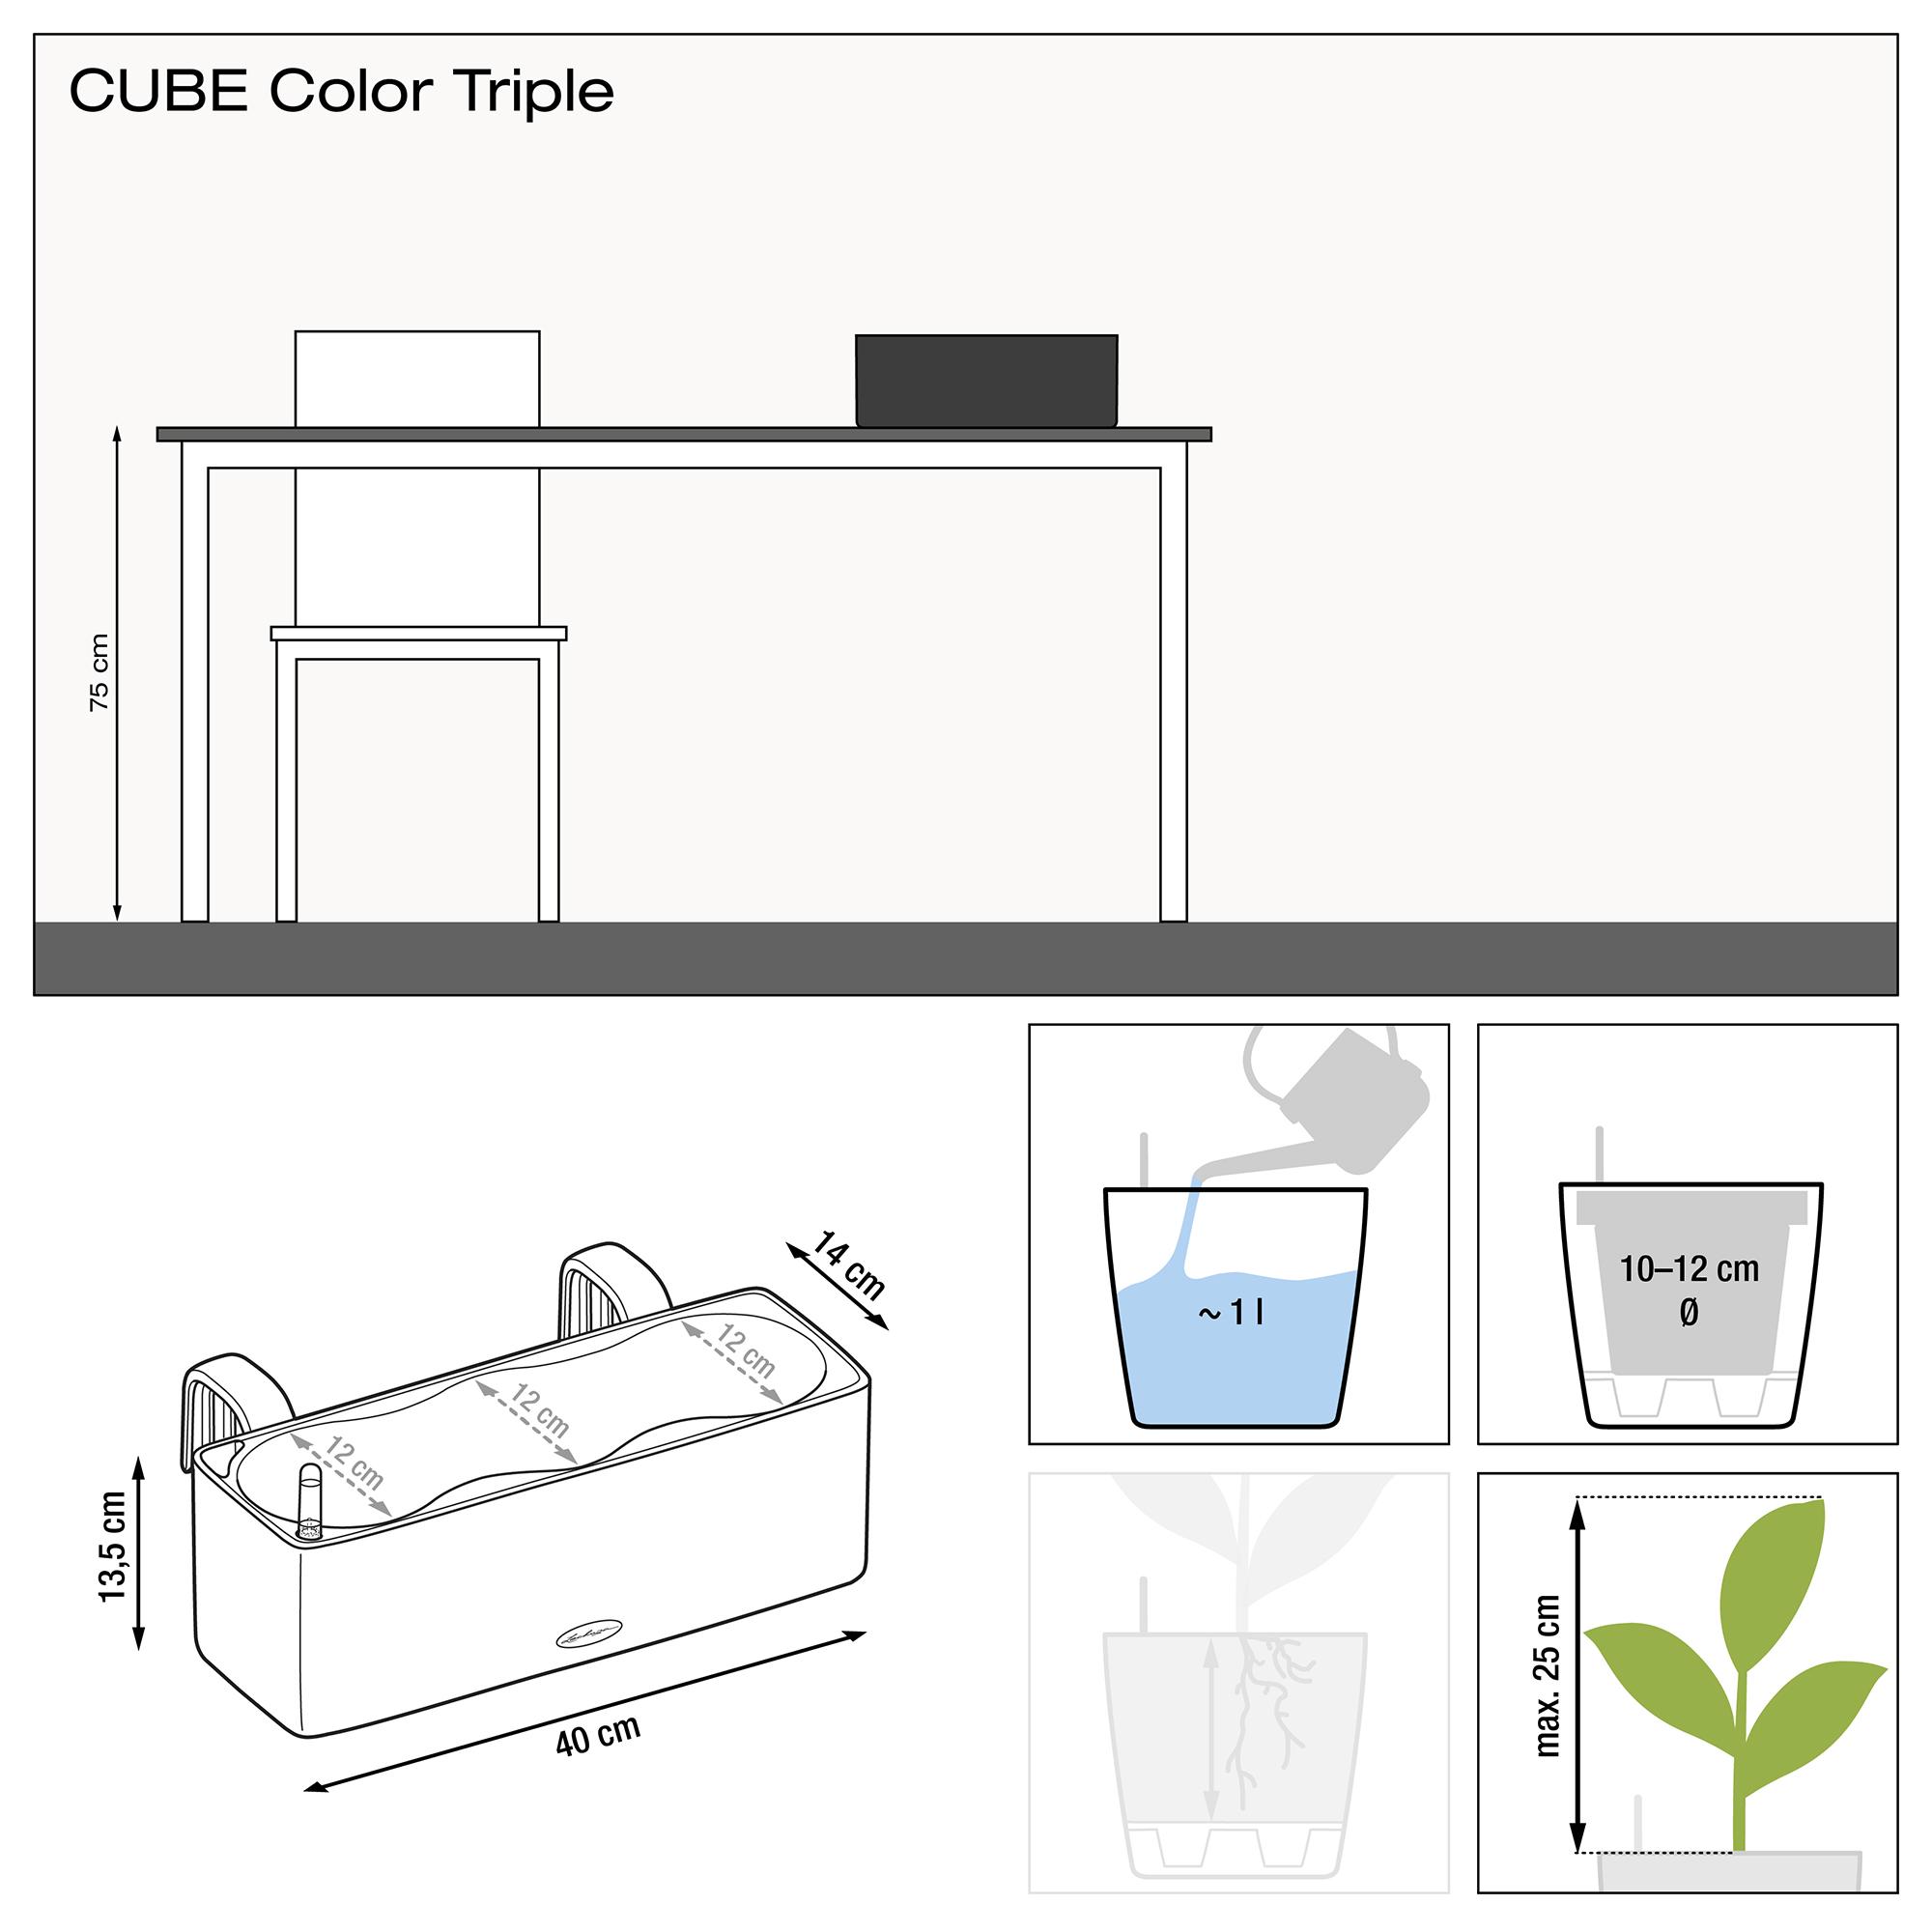 le_cube-color-triple_product_addi_nz